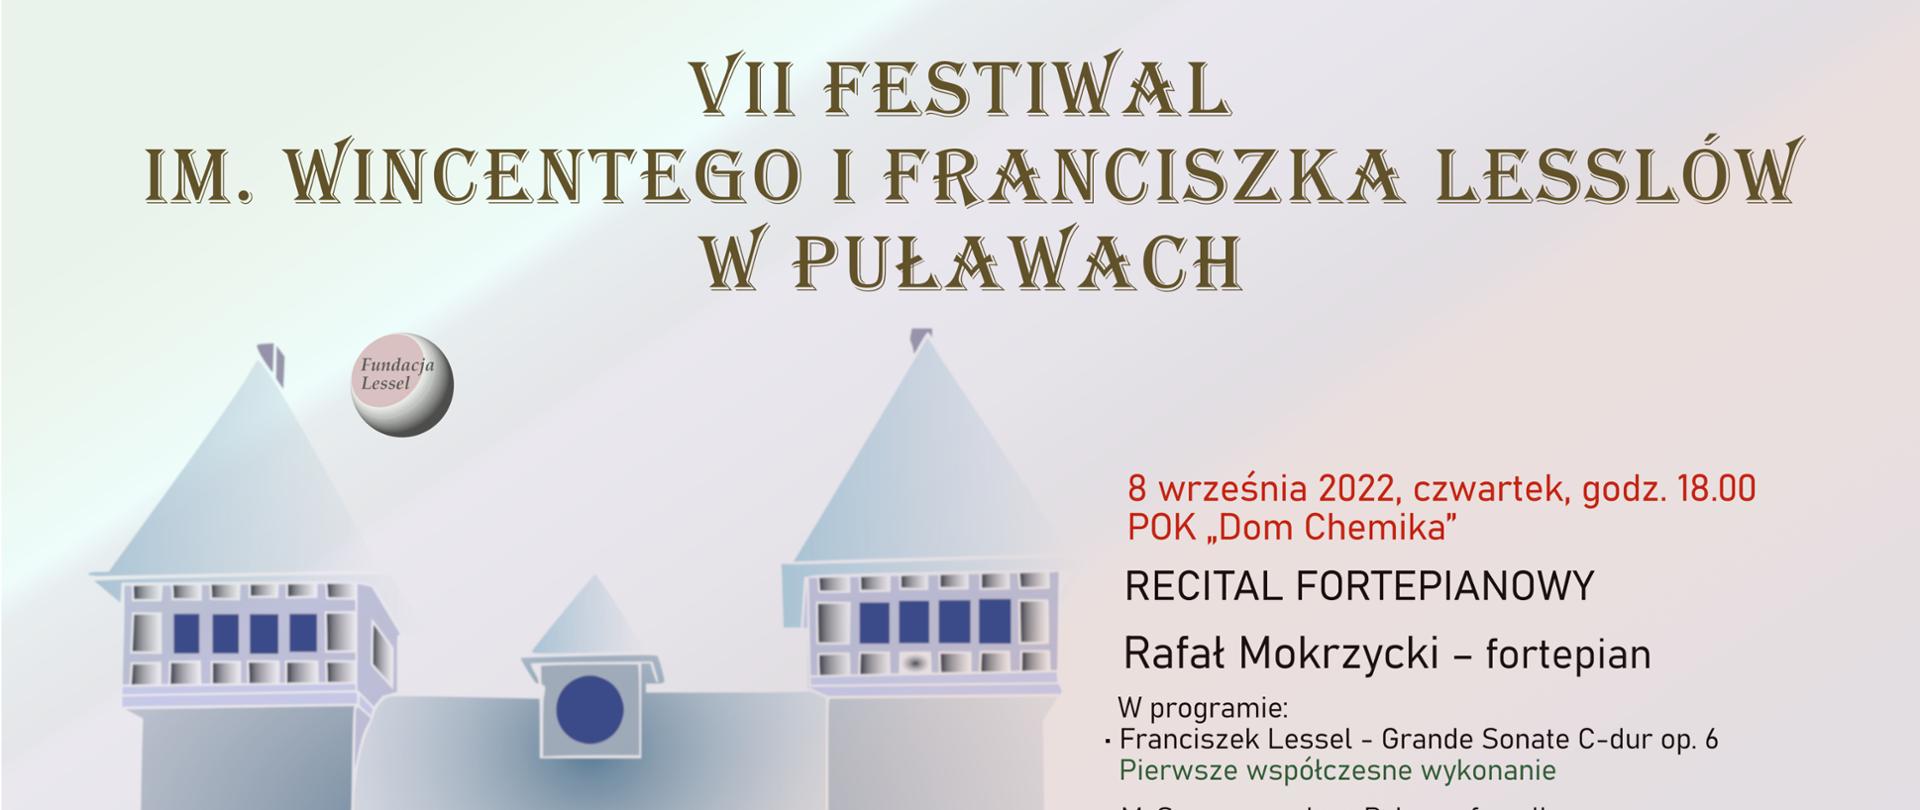 Plakat z programem festiwalu